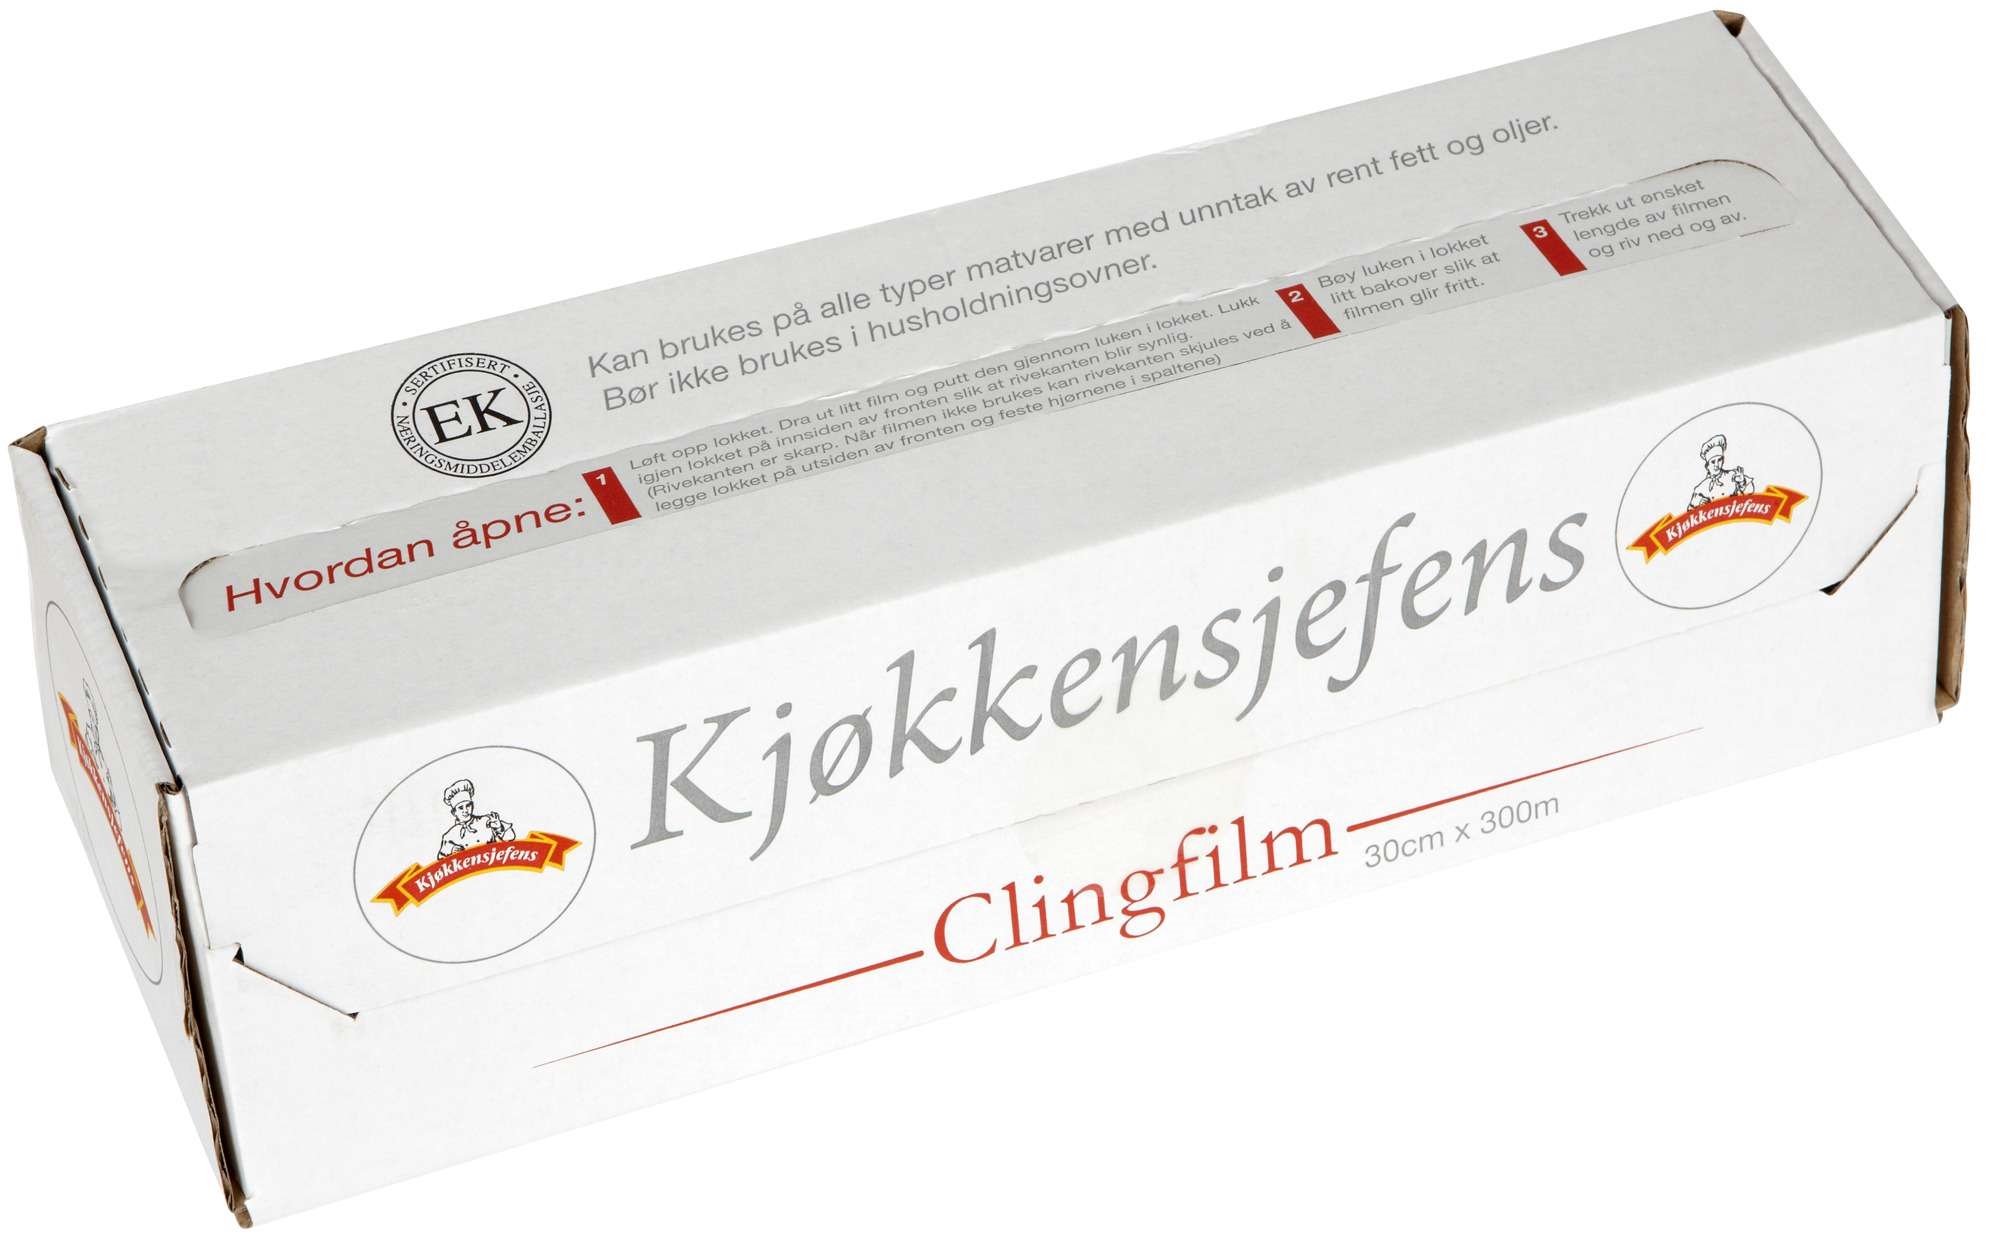 Clingfilm cutbox 30cmx300m  rl